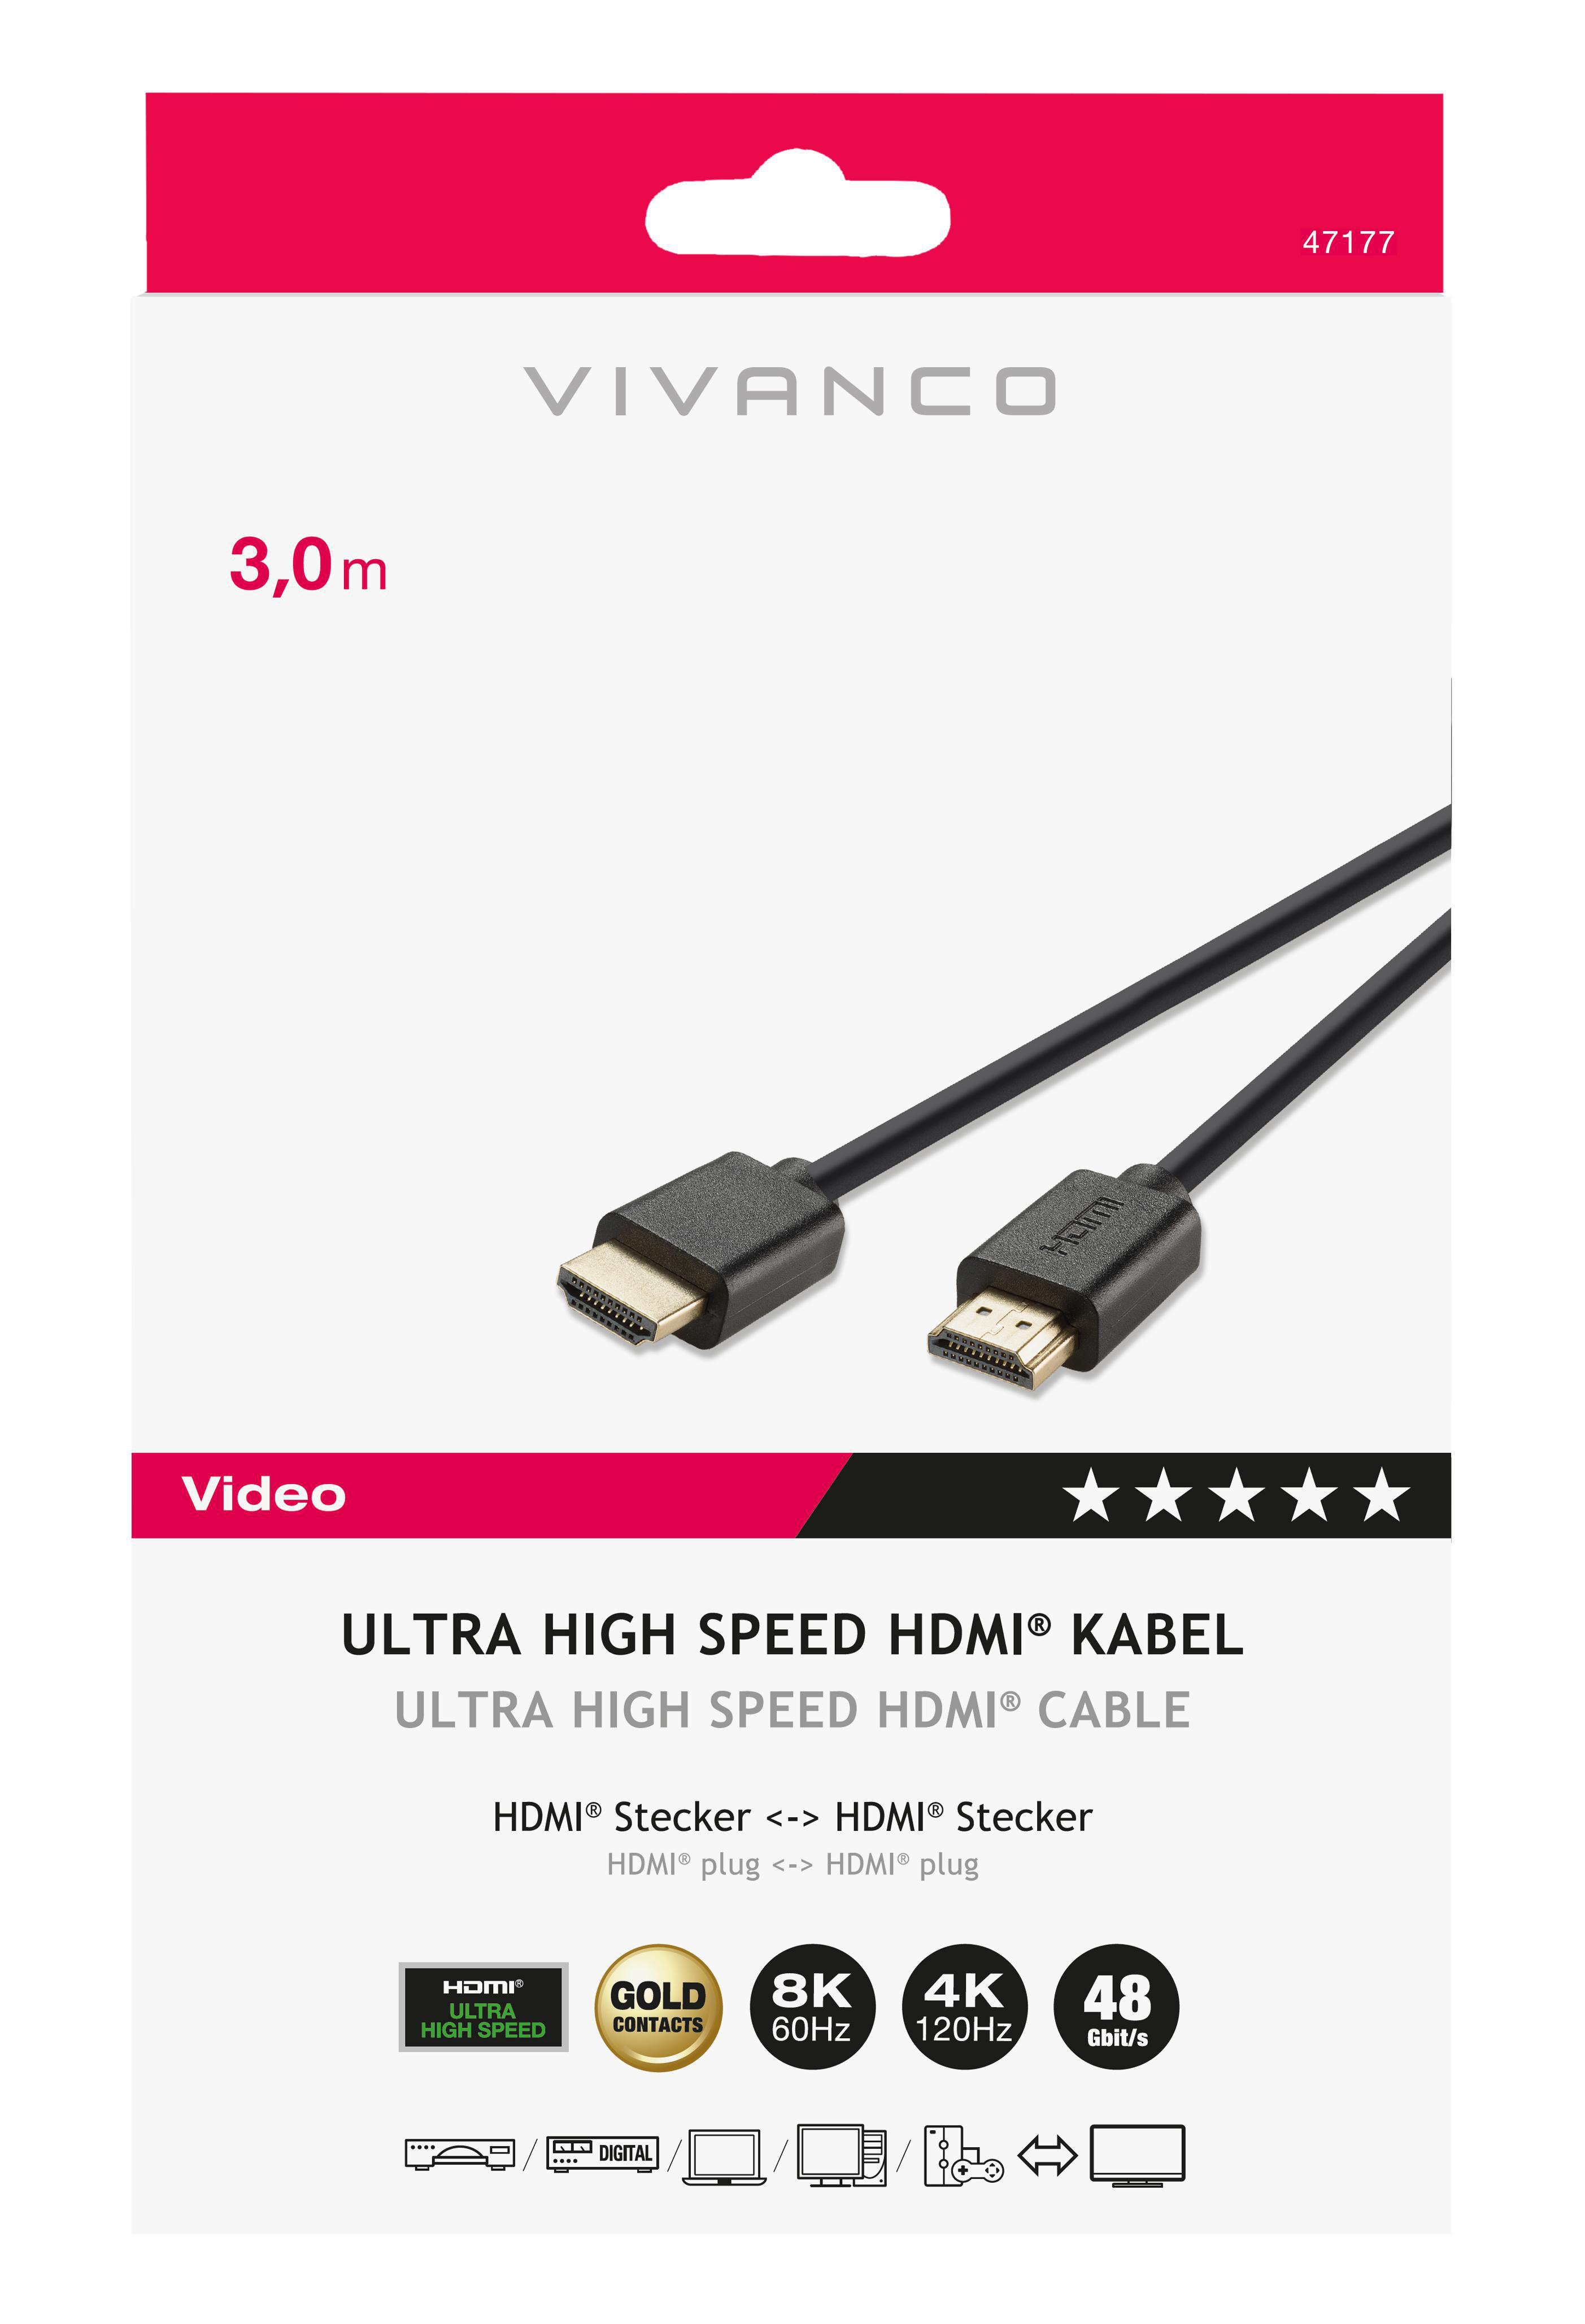 VIVANCO 47177, HDMI Kabel, 3 m